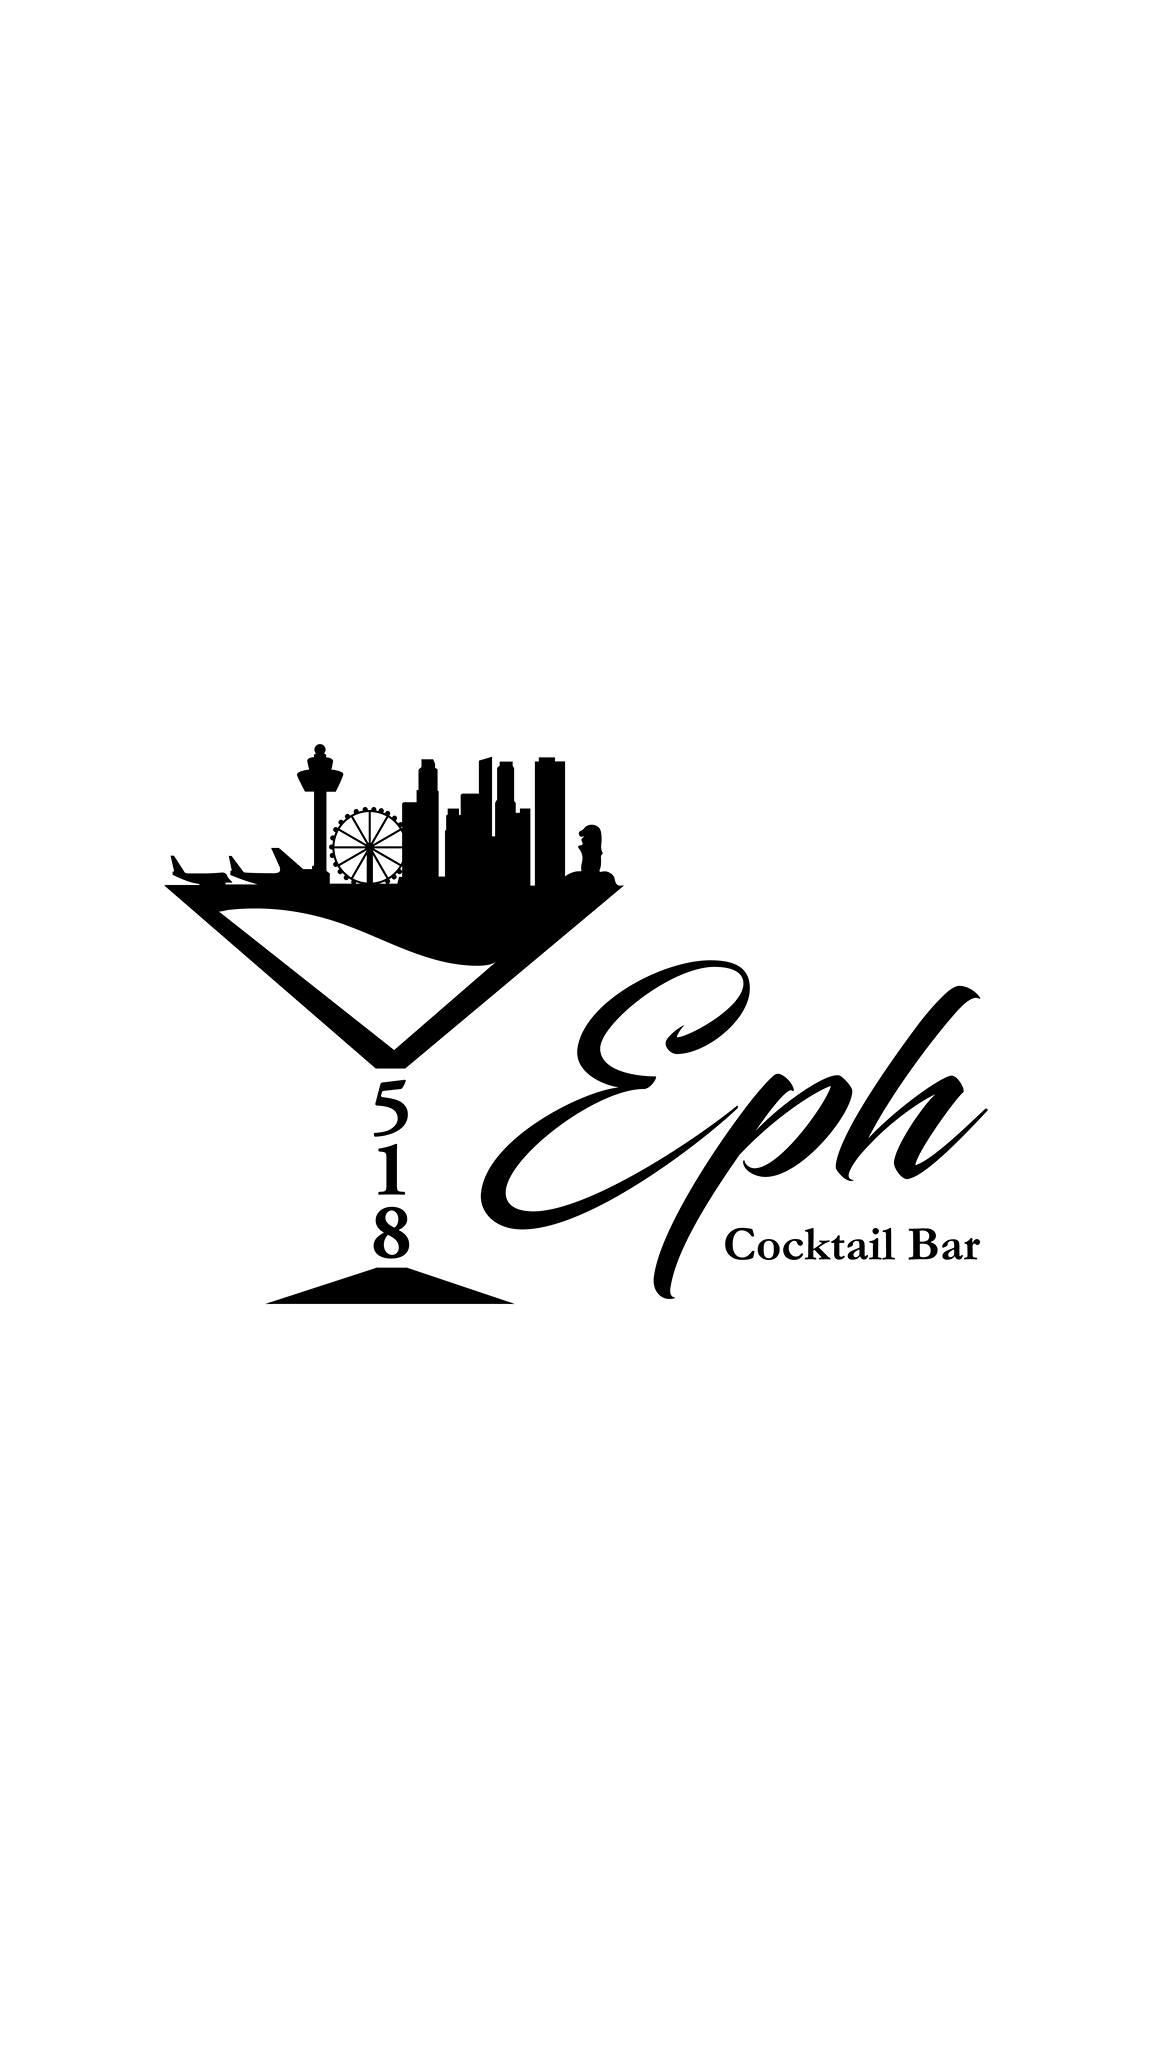 Eph518 Cocktail Bar